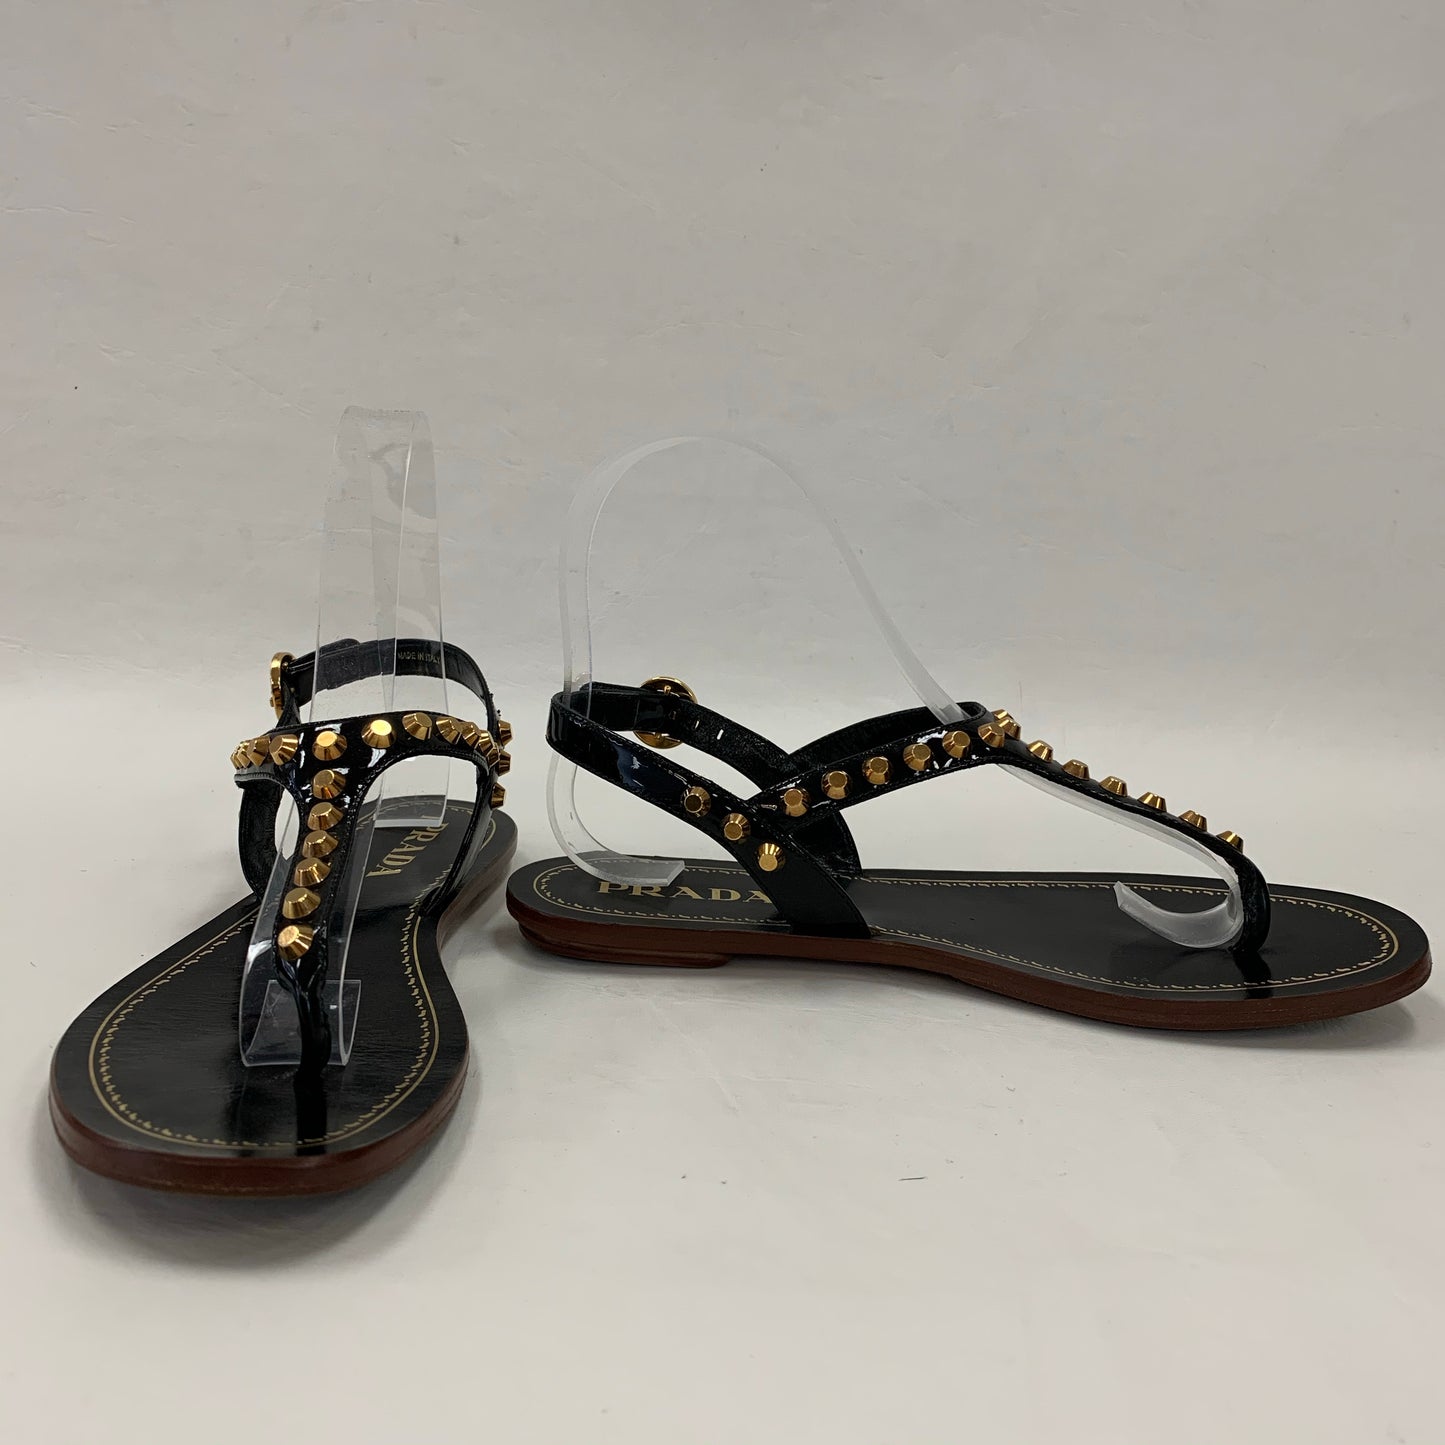 Authentic Prada Calzature Donna Black Studded Sandals